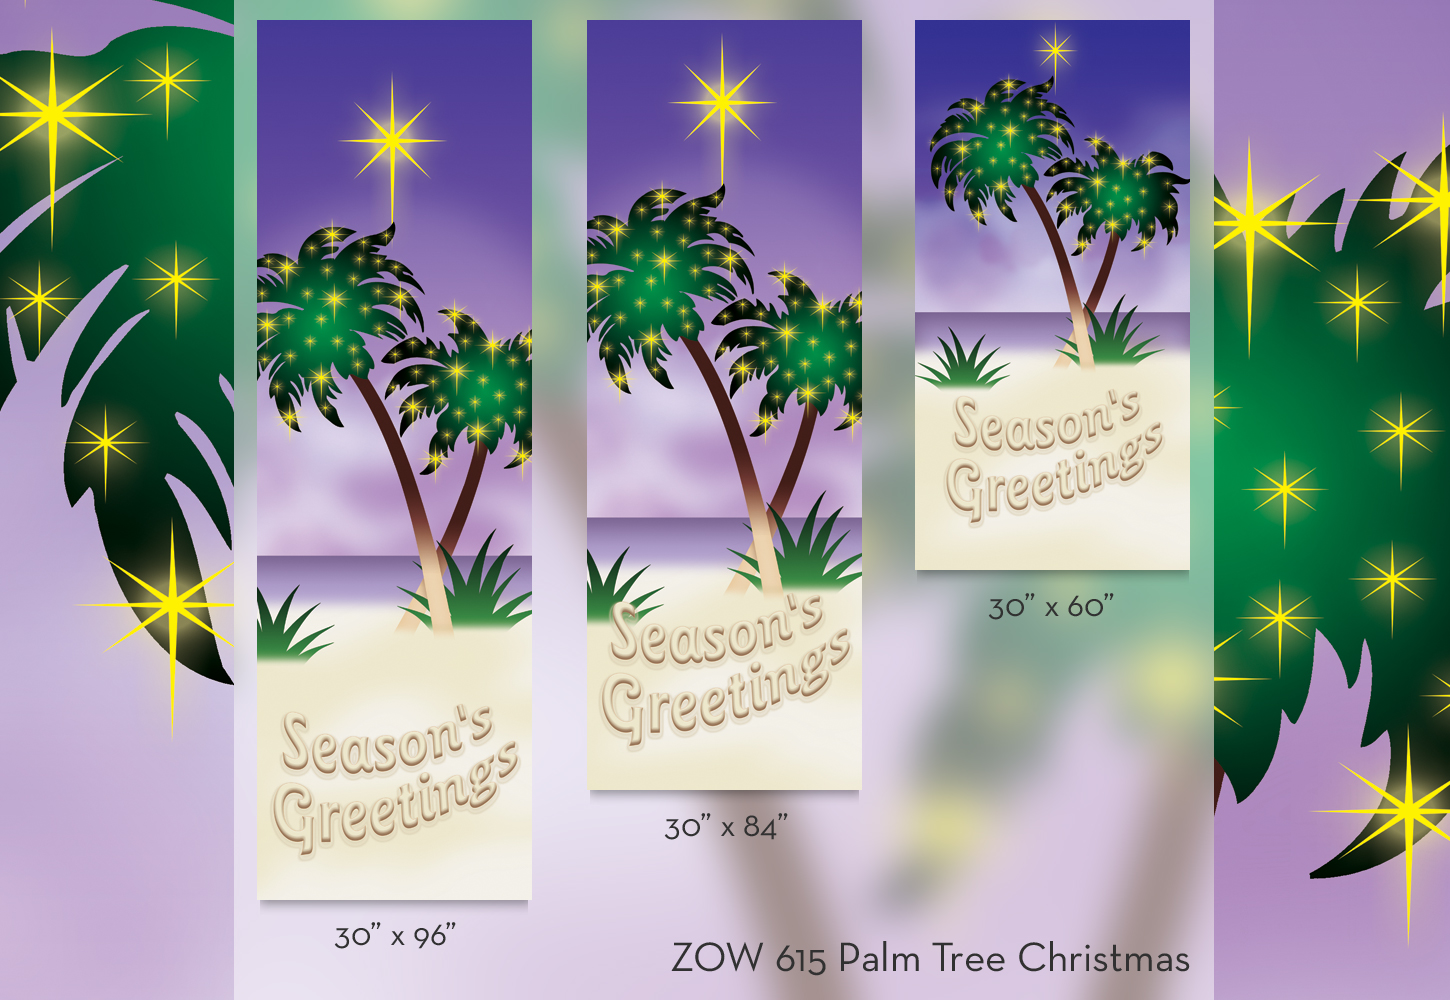 ZOW 615 Palm Tree Christmas